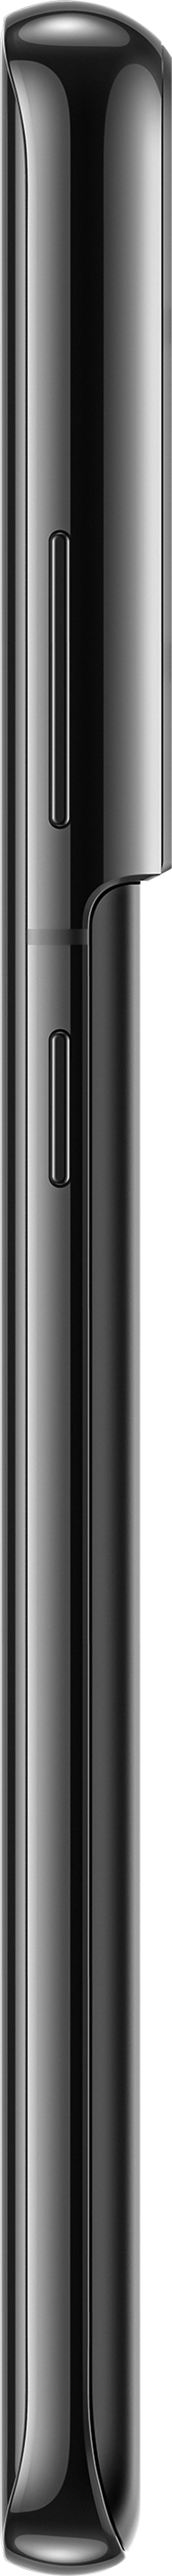 Samsung Galaxy S21 Ultra 5G 128GB Kaksois-SIM Phantom black